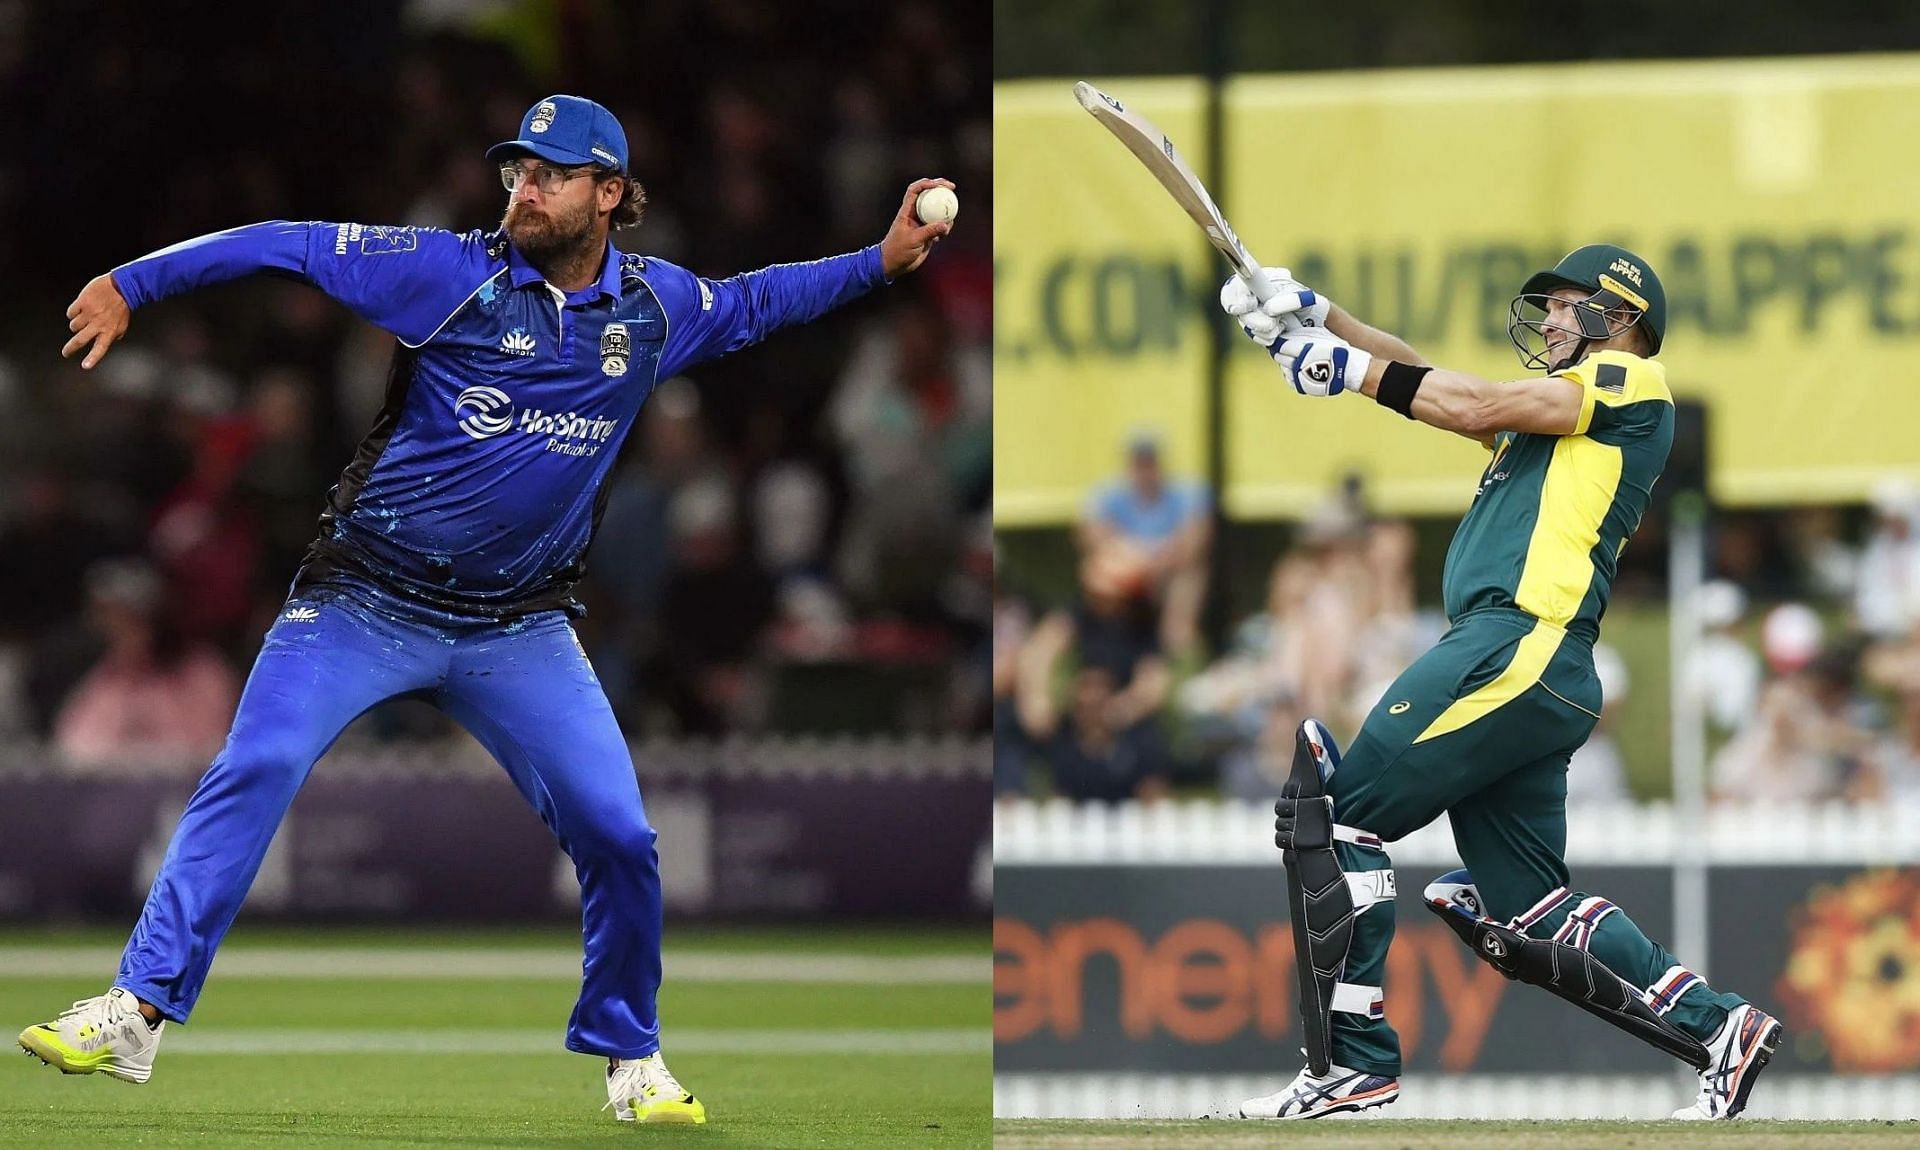 Shane Watson and Daniel Vettori replace Herschelle Gibbs and Sanath Jayasuriya in World Giants squad for special match